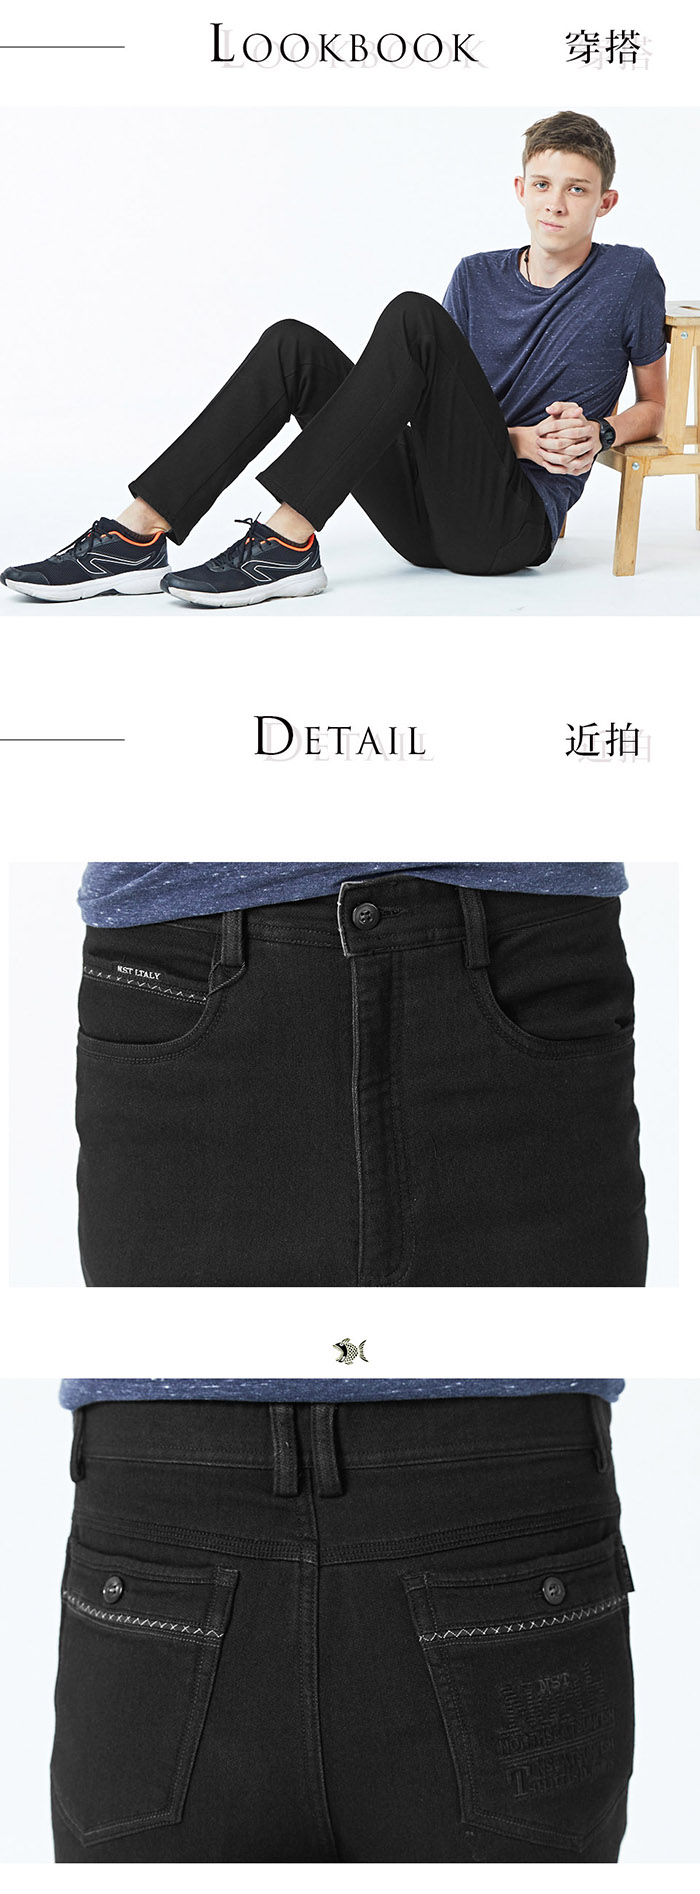 【NST Jeans】黑色民族風 加厚 針織彈性休閒男褲(中腰直筒) 395(66608)